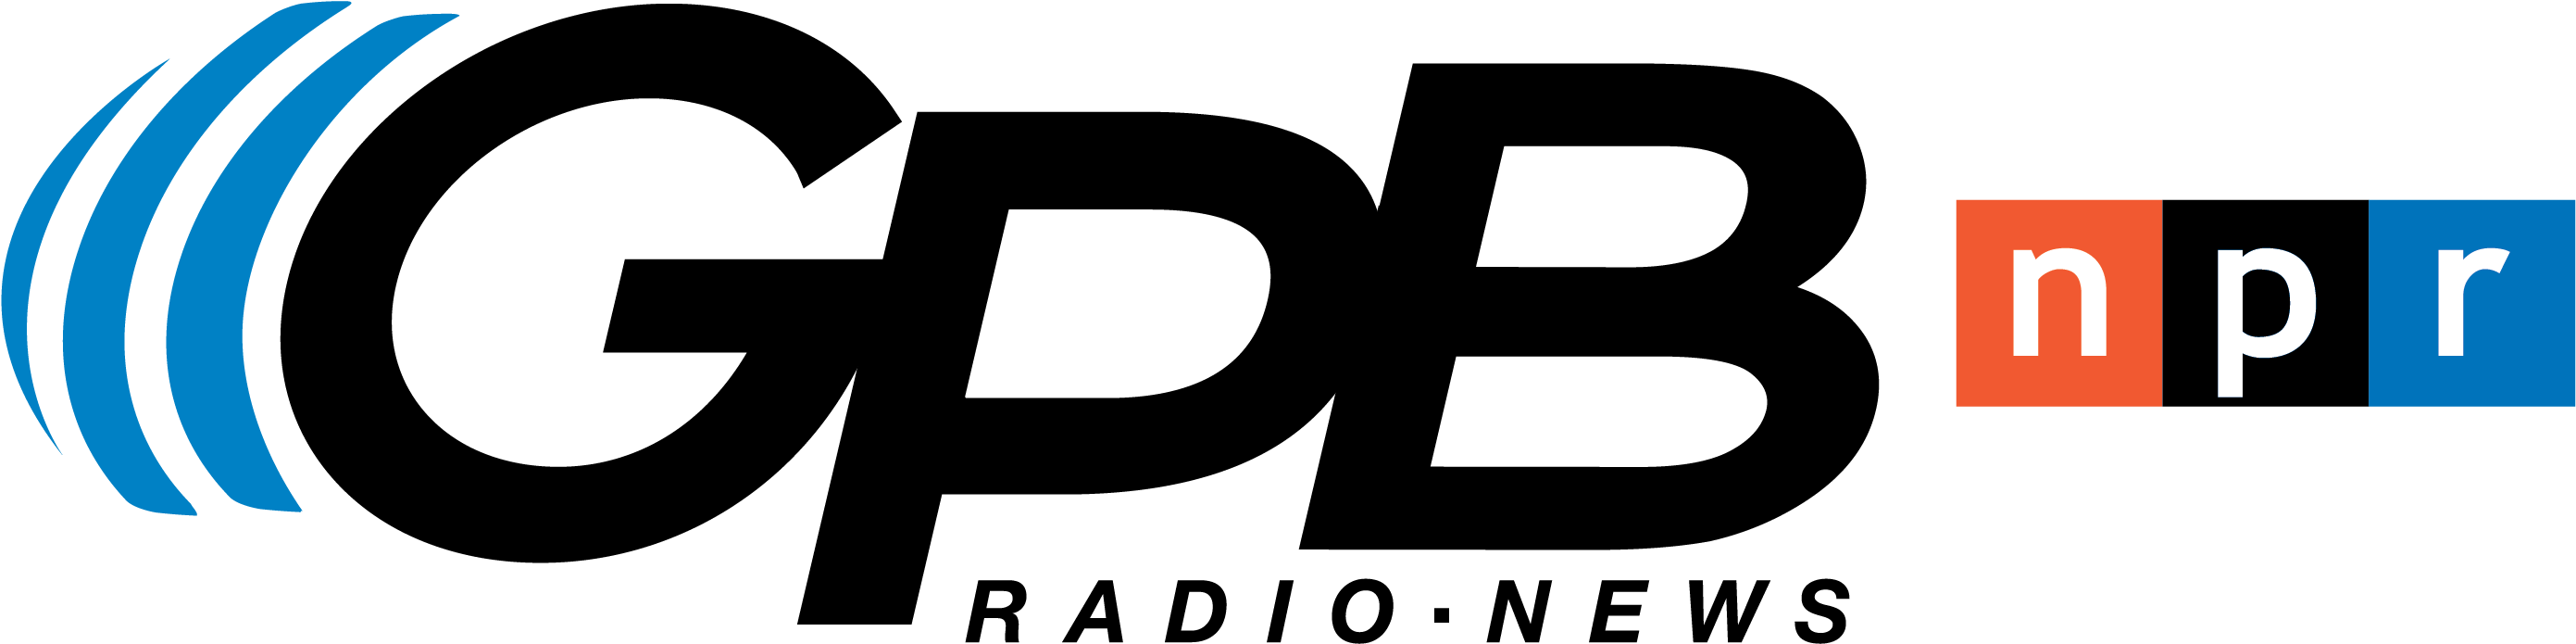 Georgia Public Broadcasting Logo - Georgia Public Broadcasting (2830x826), Png Download